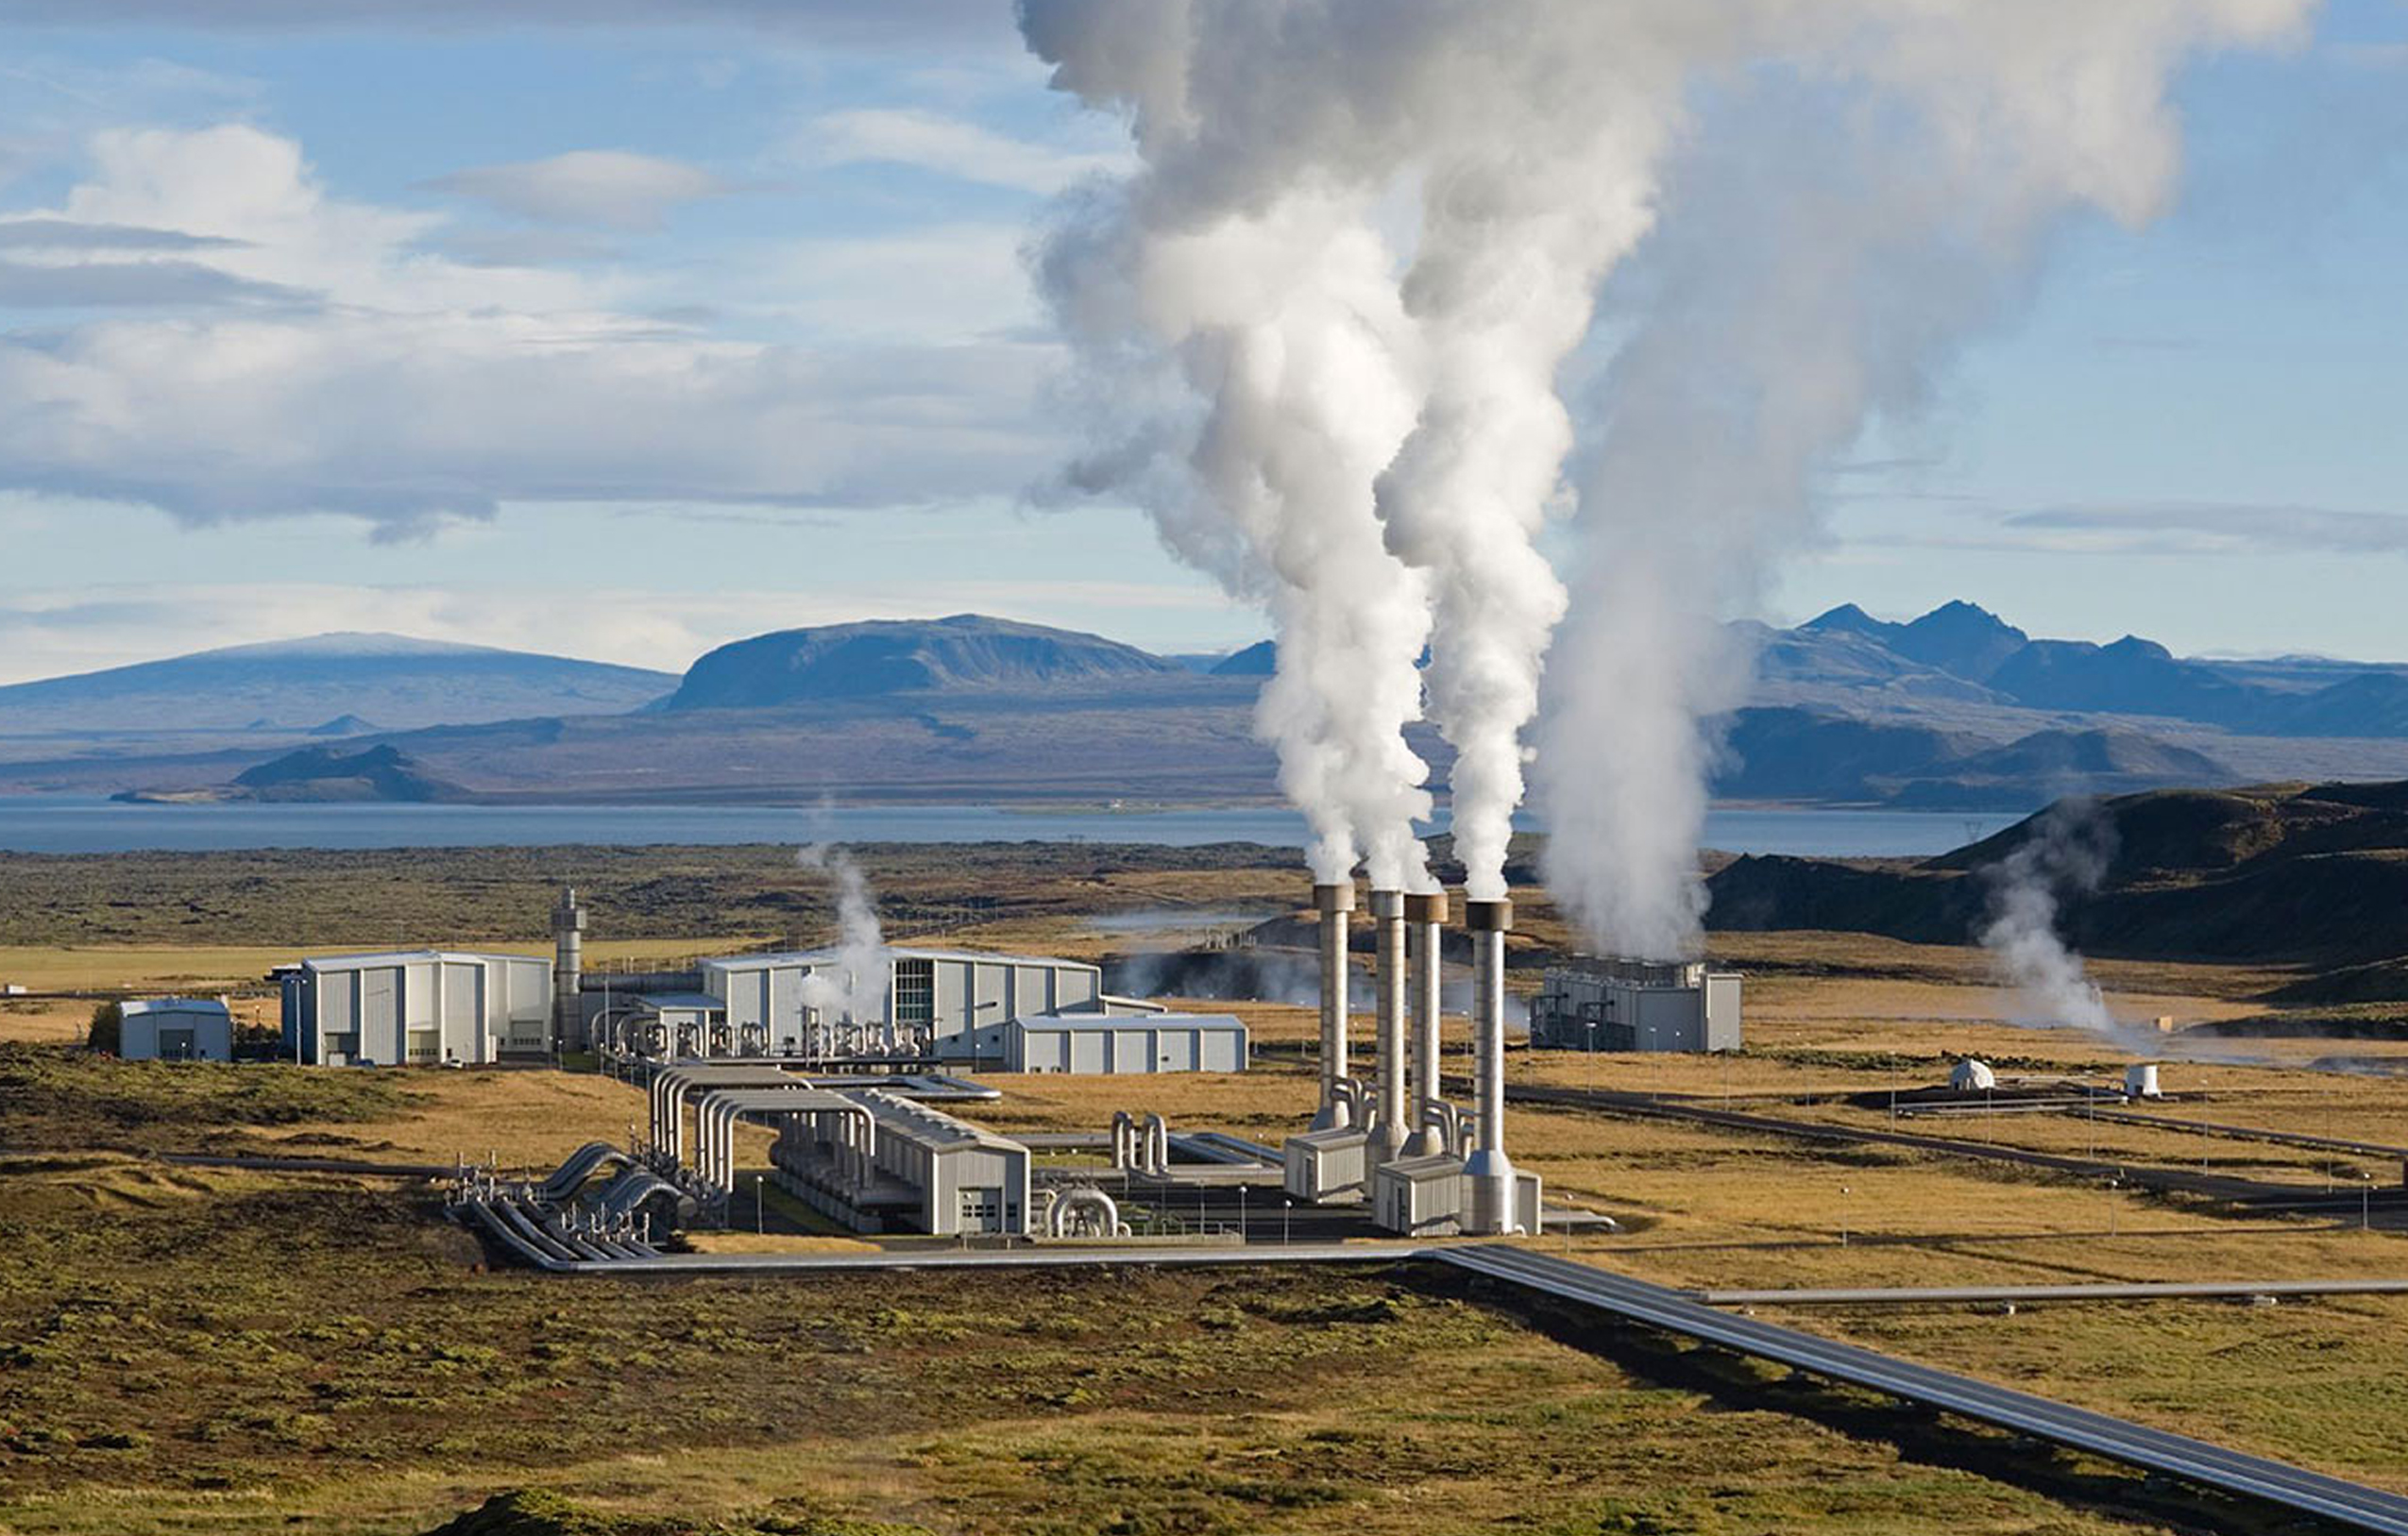 Geothermal renewable energy